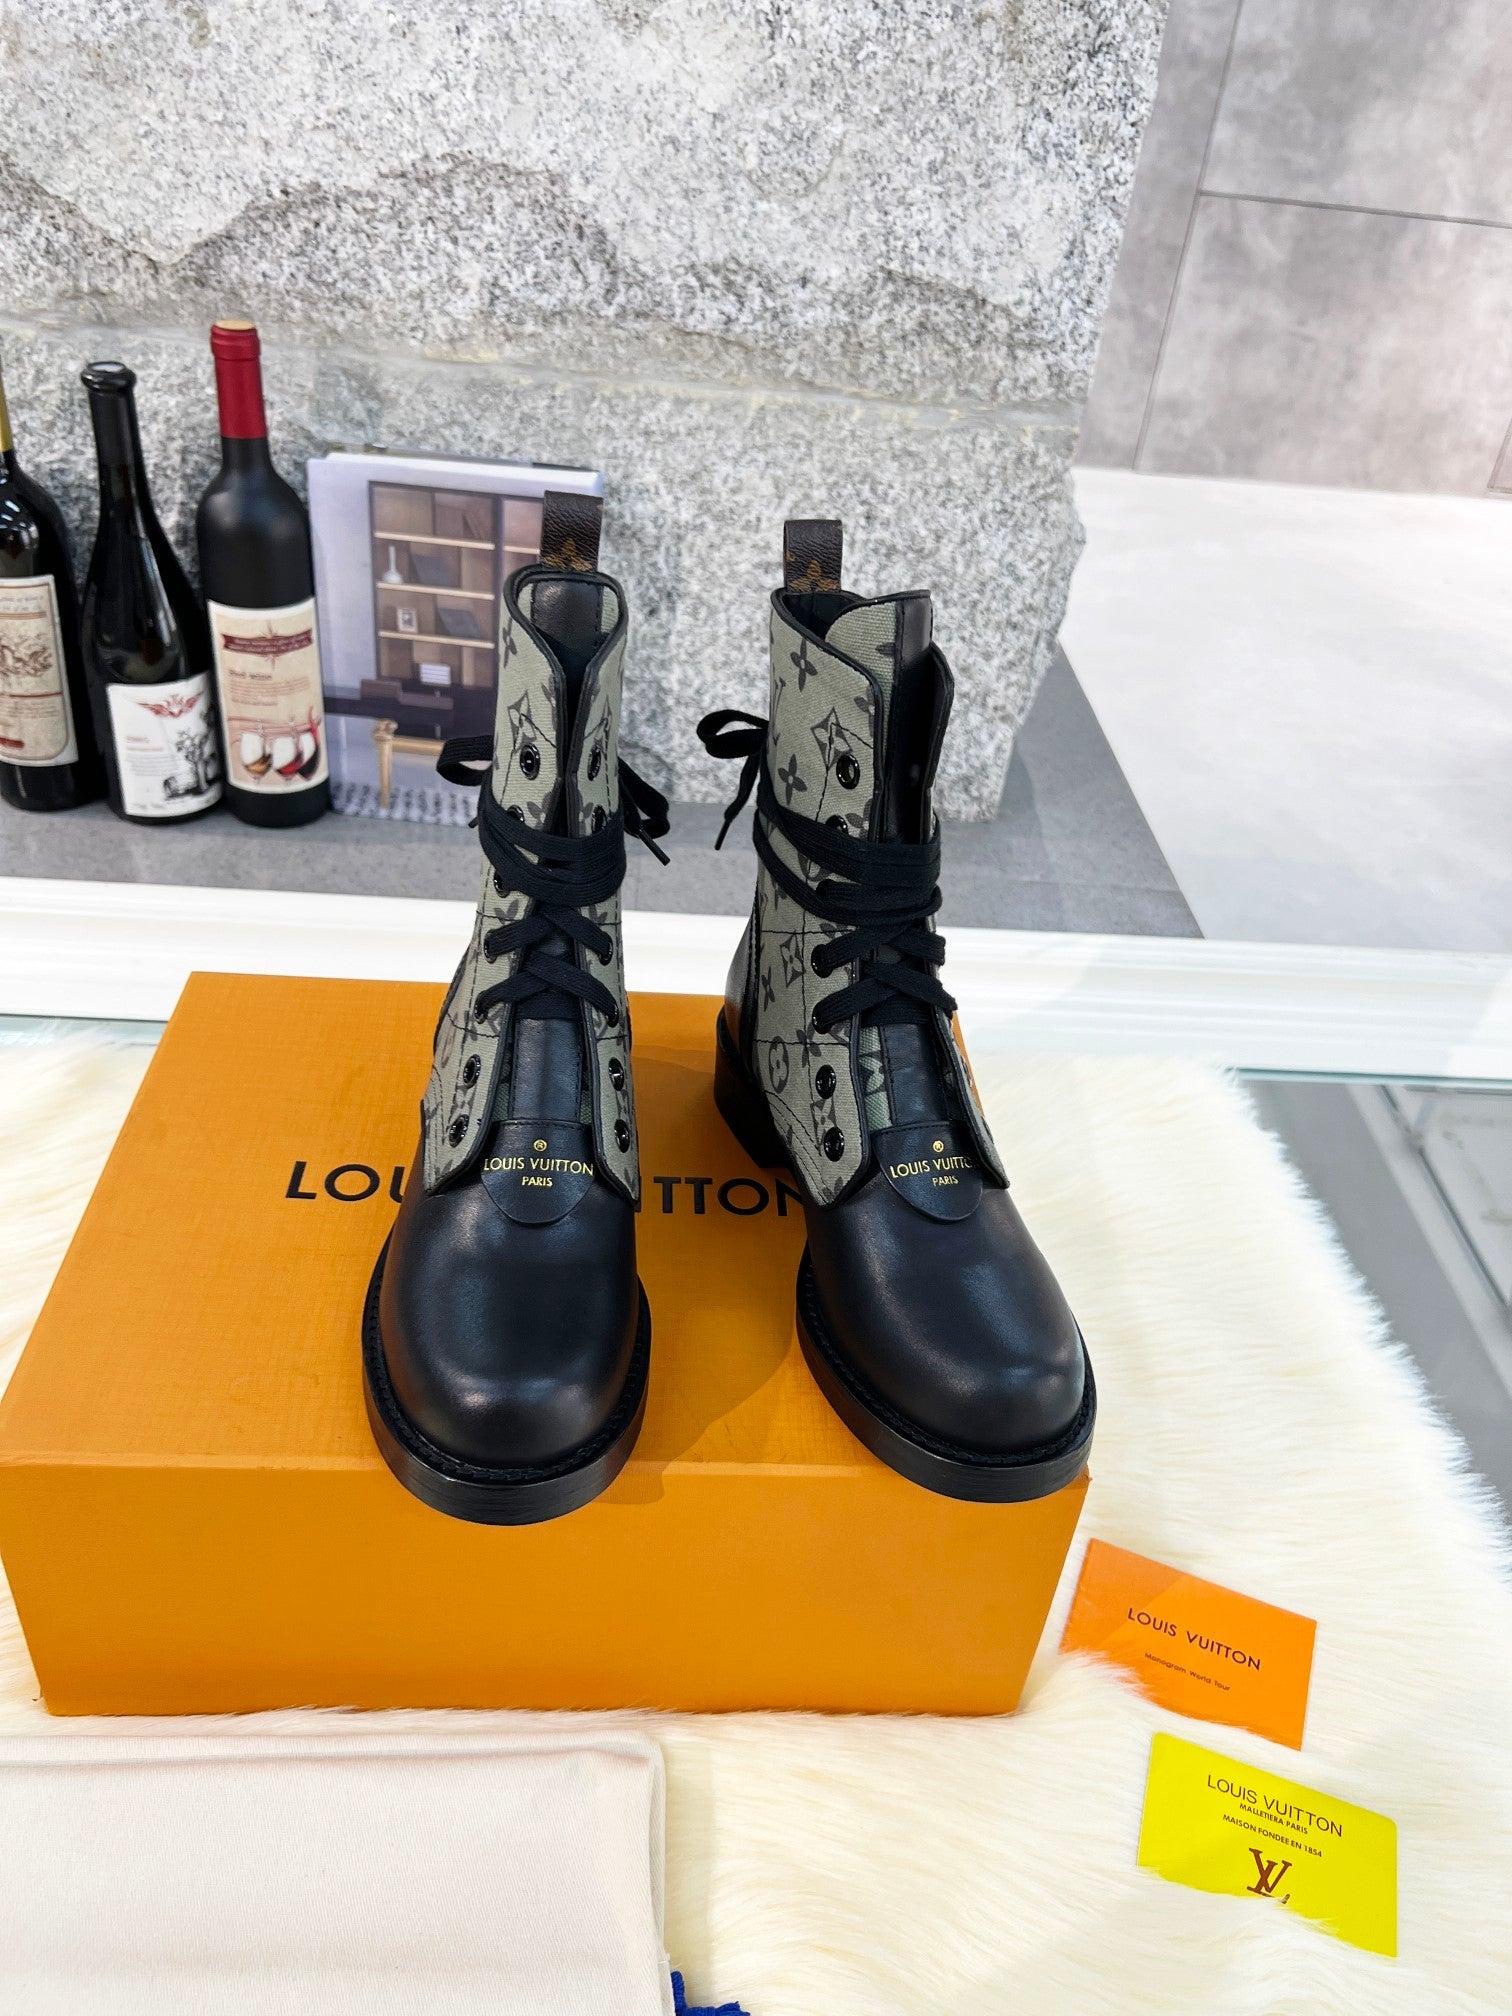 New Louis Vuitton Metropolis flat ranger boots size 36